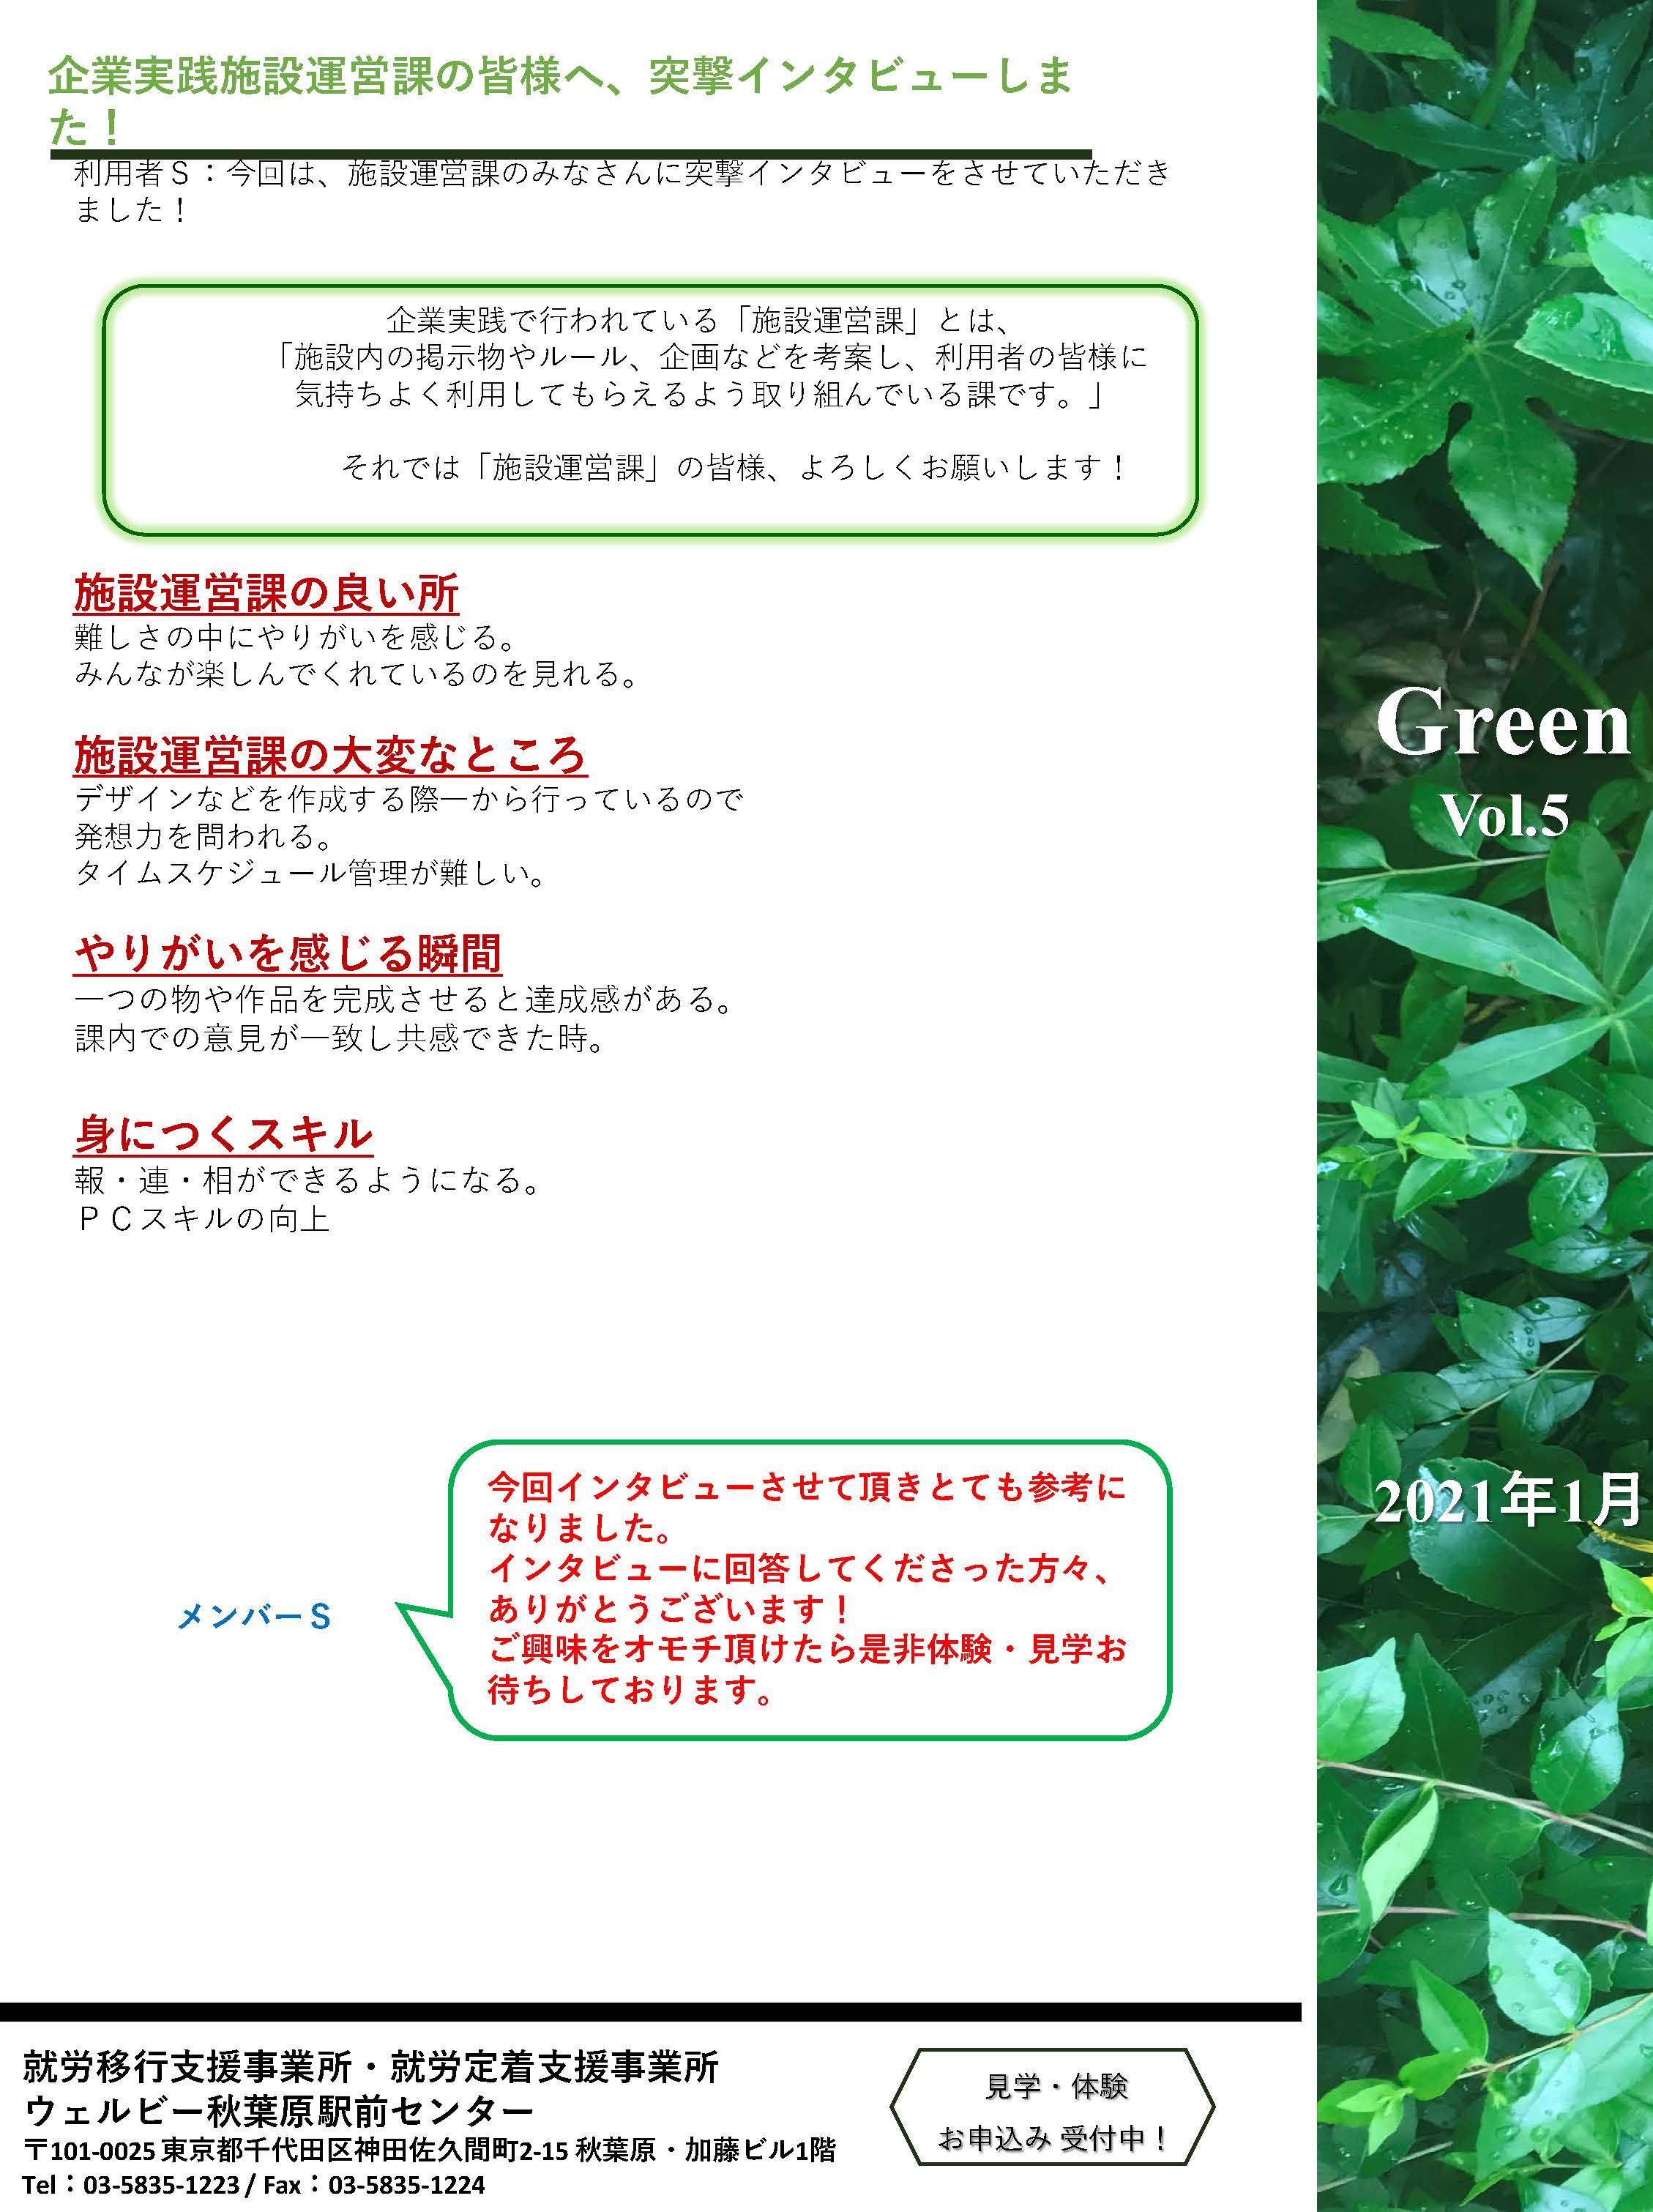 【Green_vol.5】2020年1月号_ブログ掲載用編集版_ページ_2